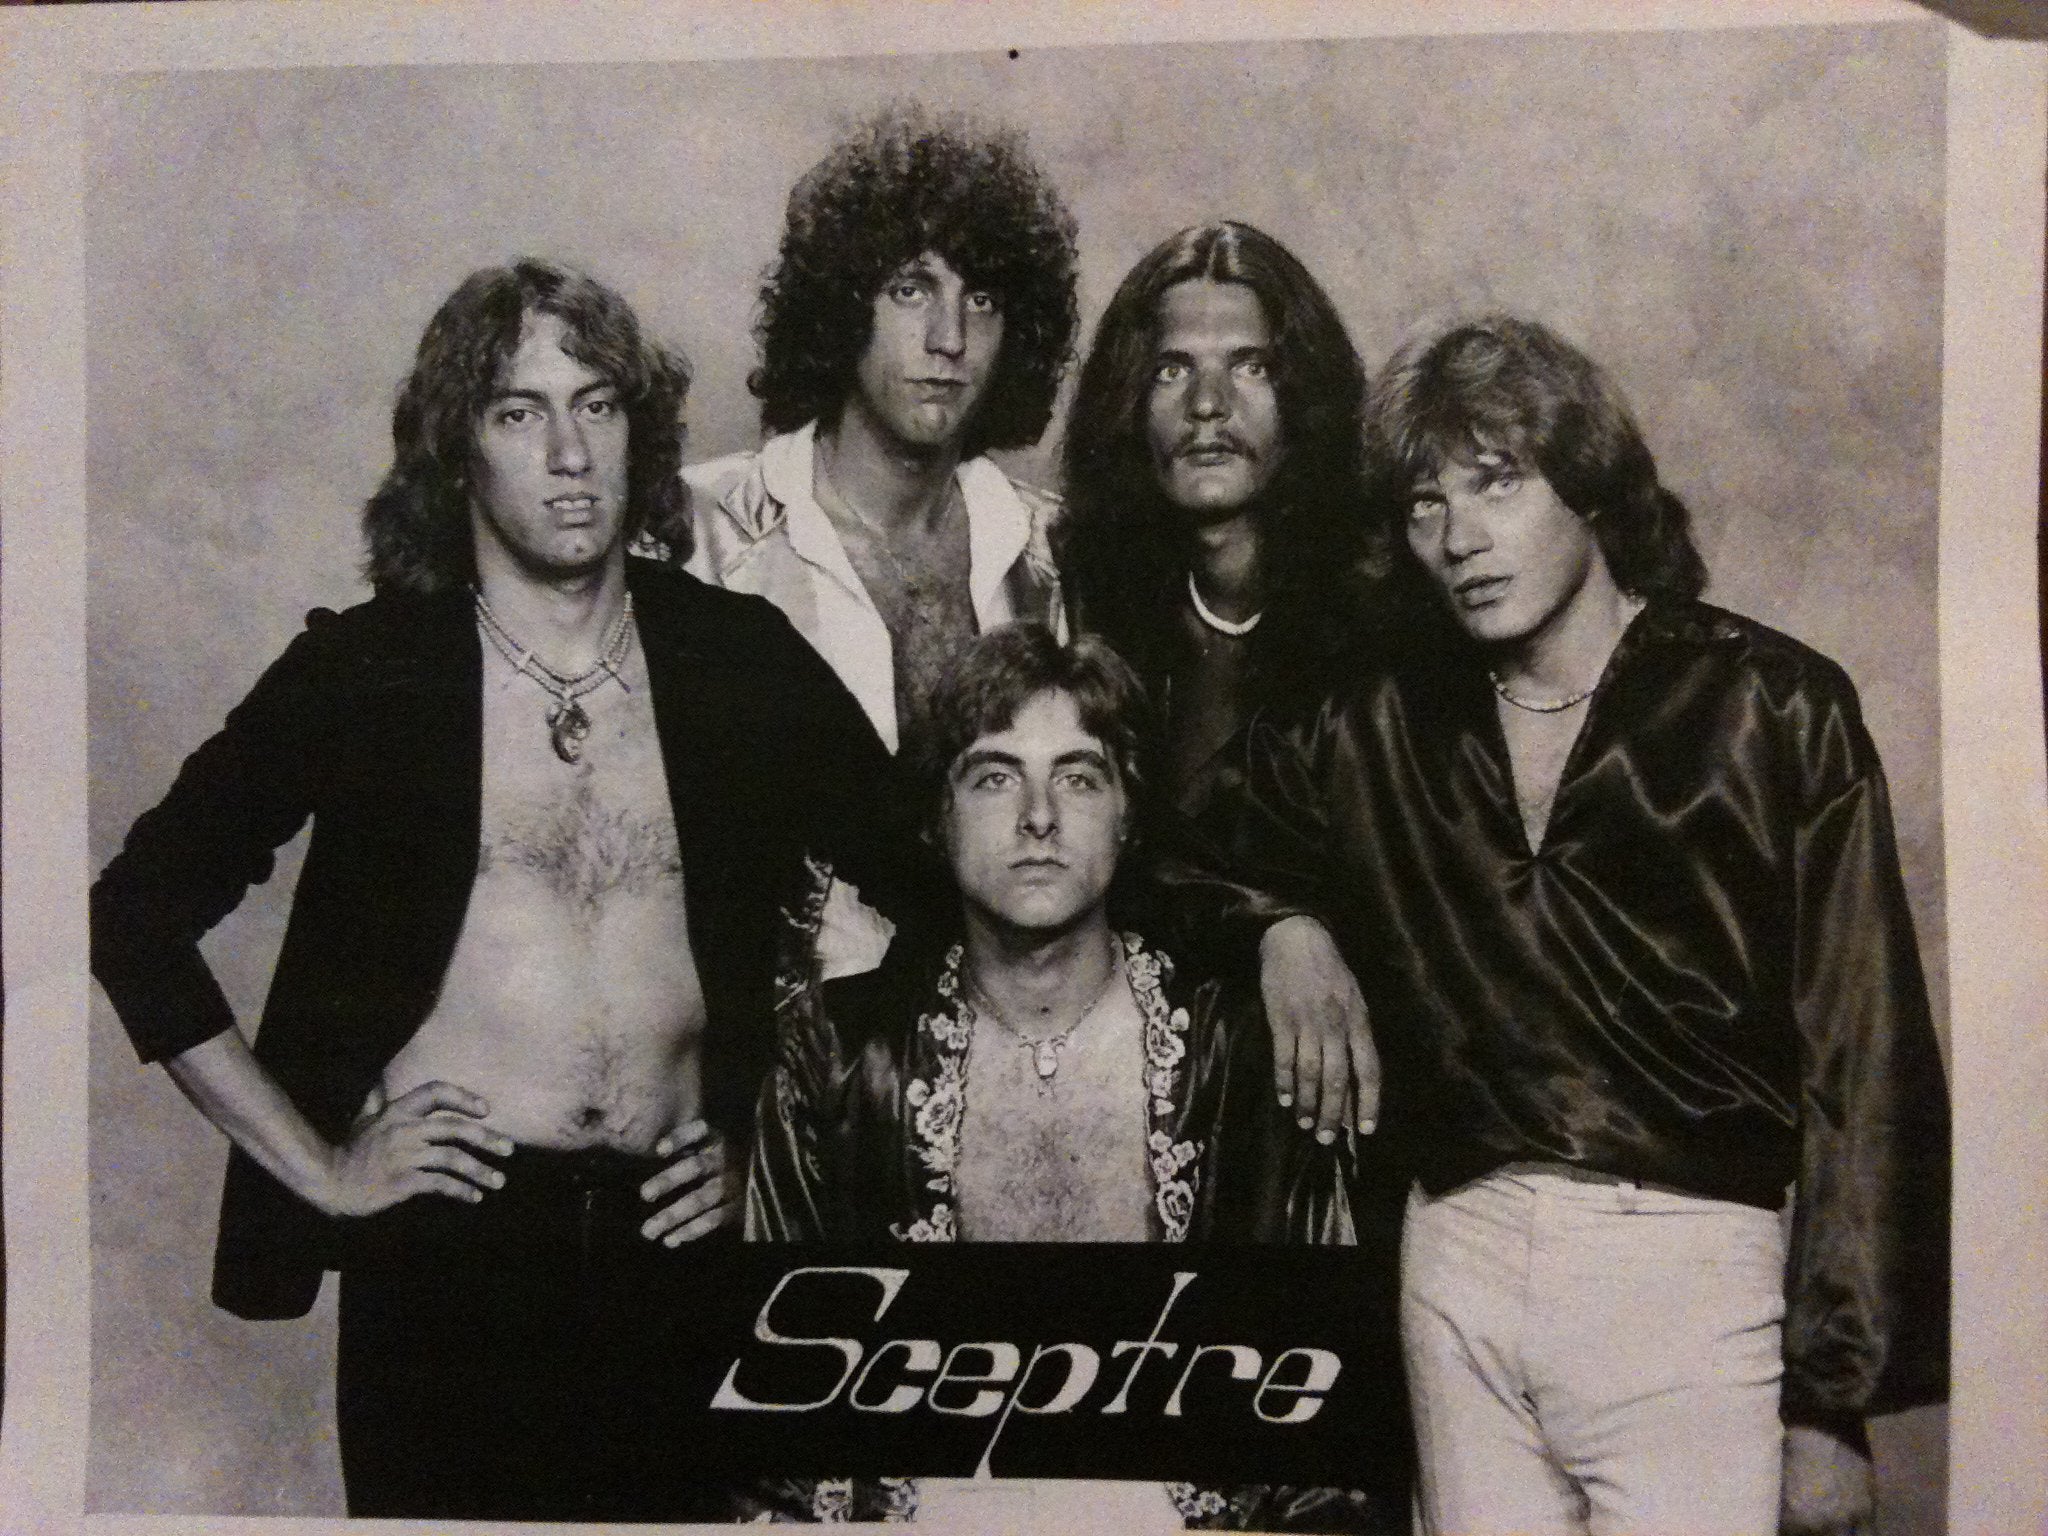 Sceptre - My Uncle's Epic 70s Rock Band: pics